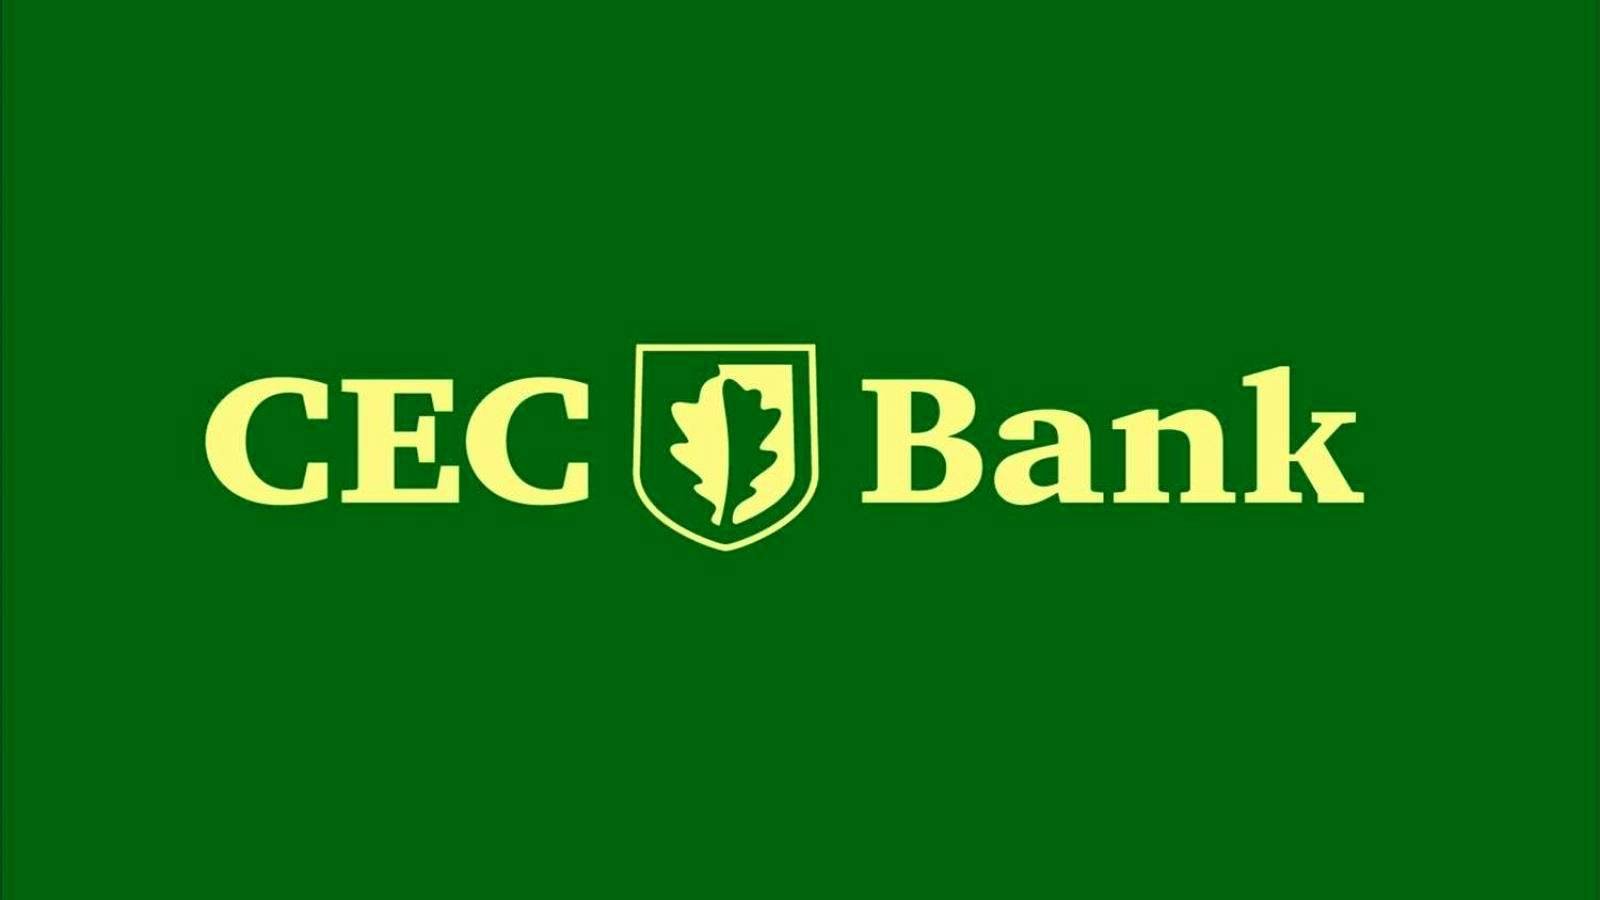 CEC Bank Informare Importanta Pericolul Real Clientii Romania